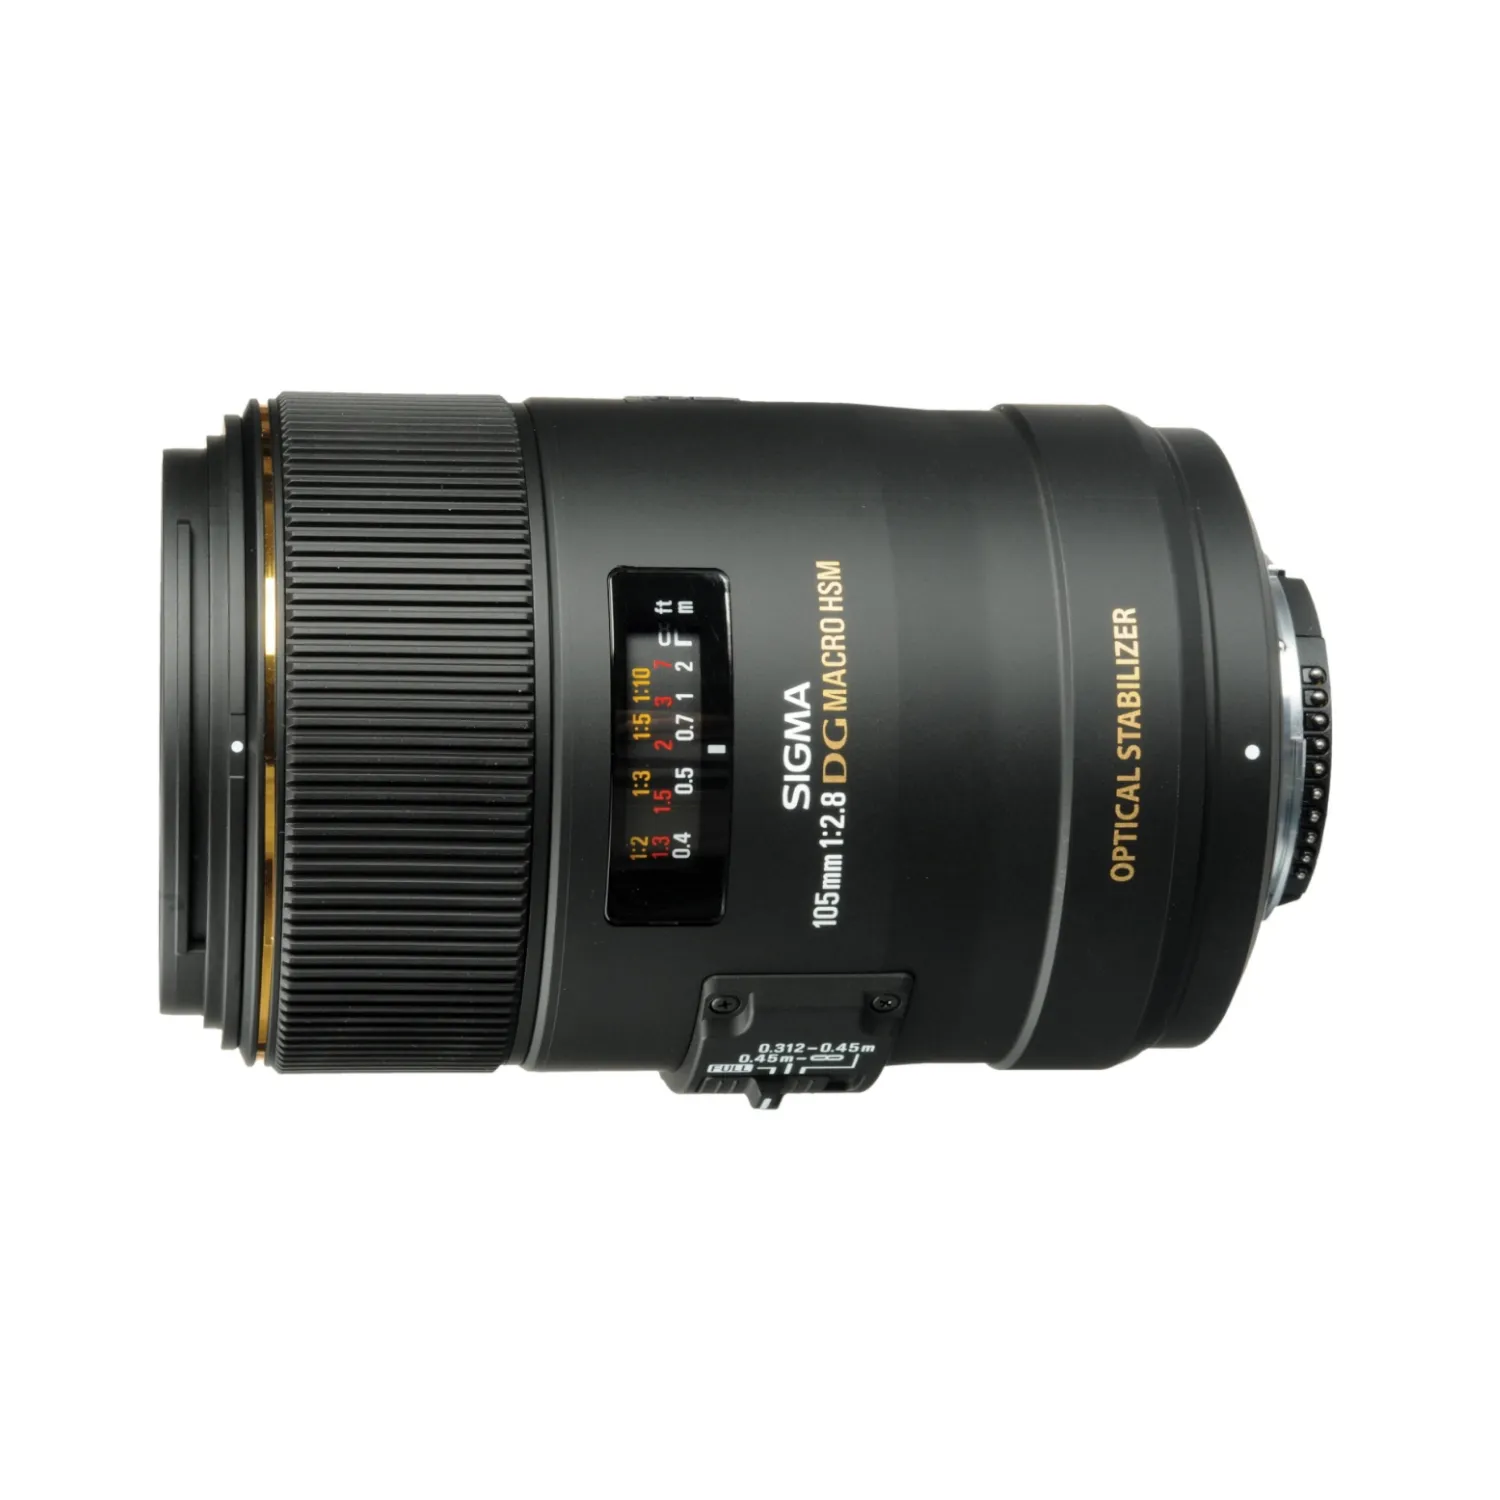 Sigma 105mm f/2.8 Macro EX DG OS HSM Lens